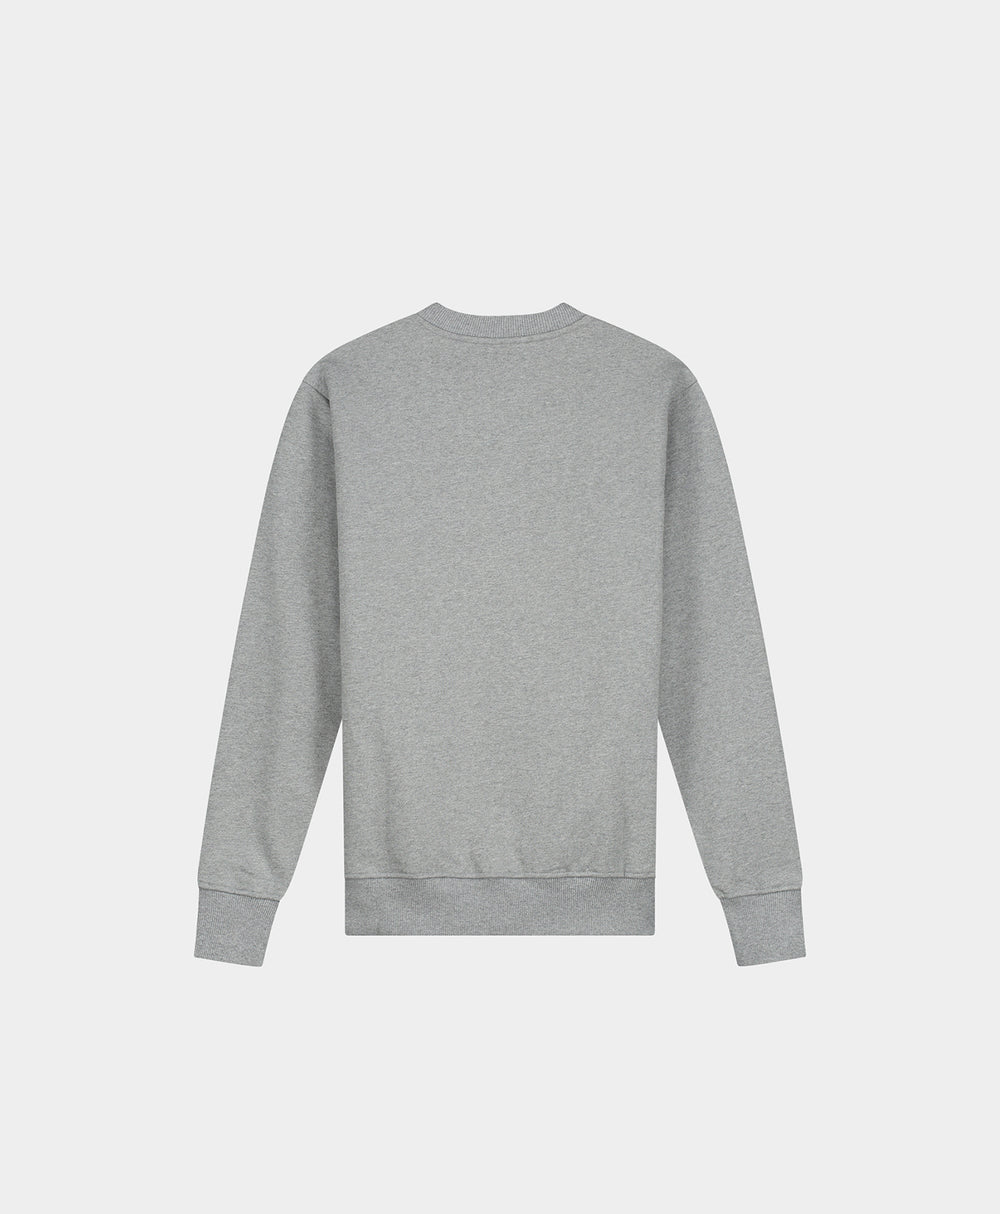 DP - Grey Alias Sweater - Packshot - Rear